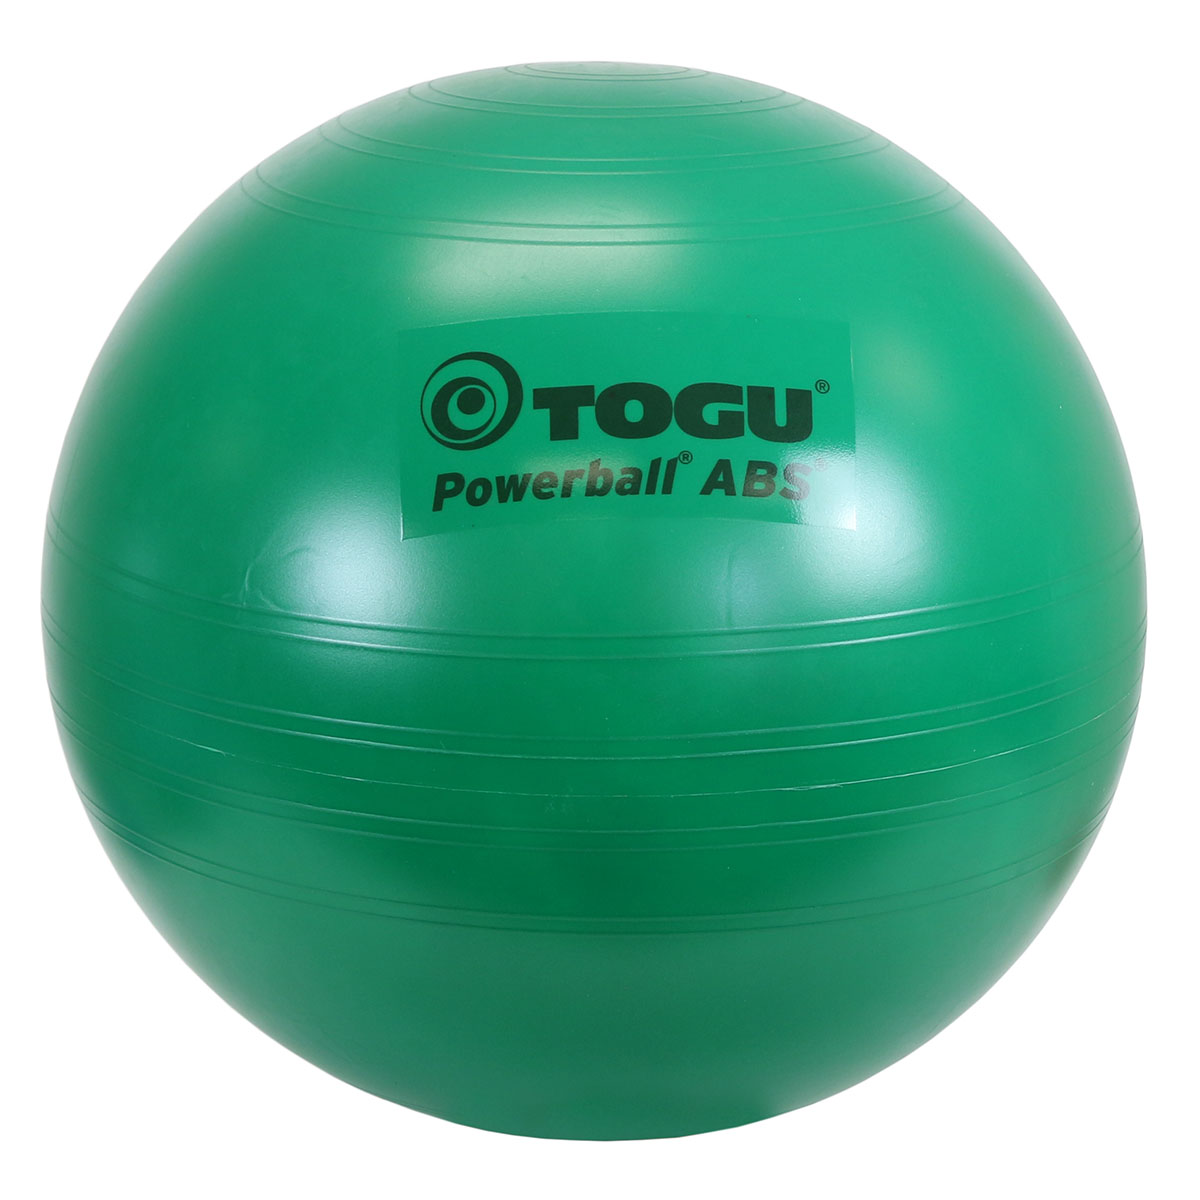 Togu 30-4002 65 cm ABS Powerball, Green -  FUJITSU SERVERSTORAGE